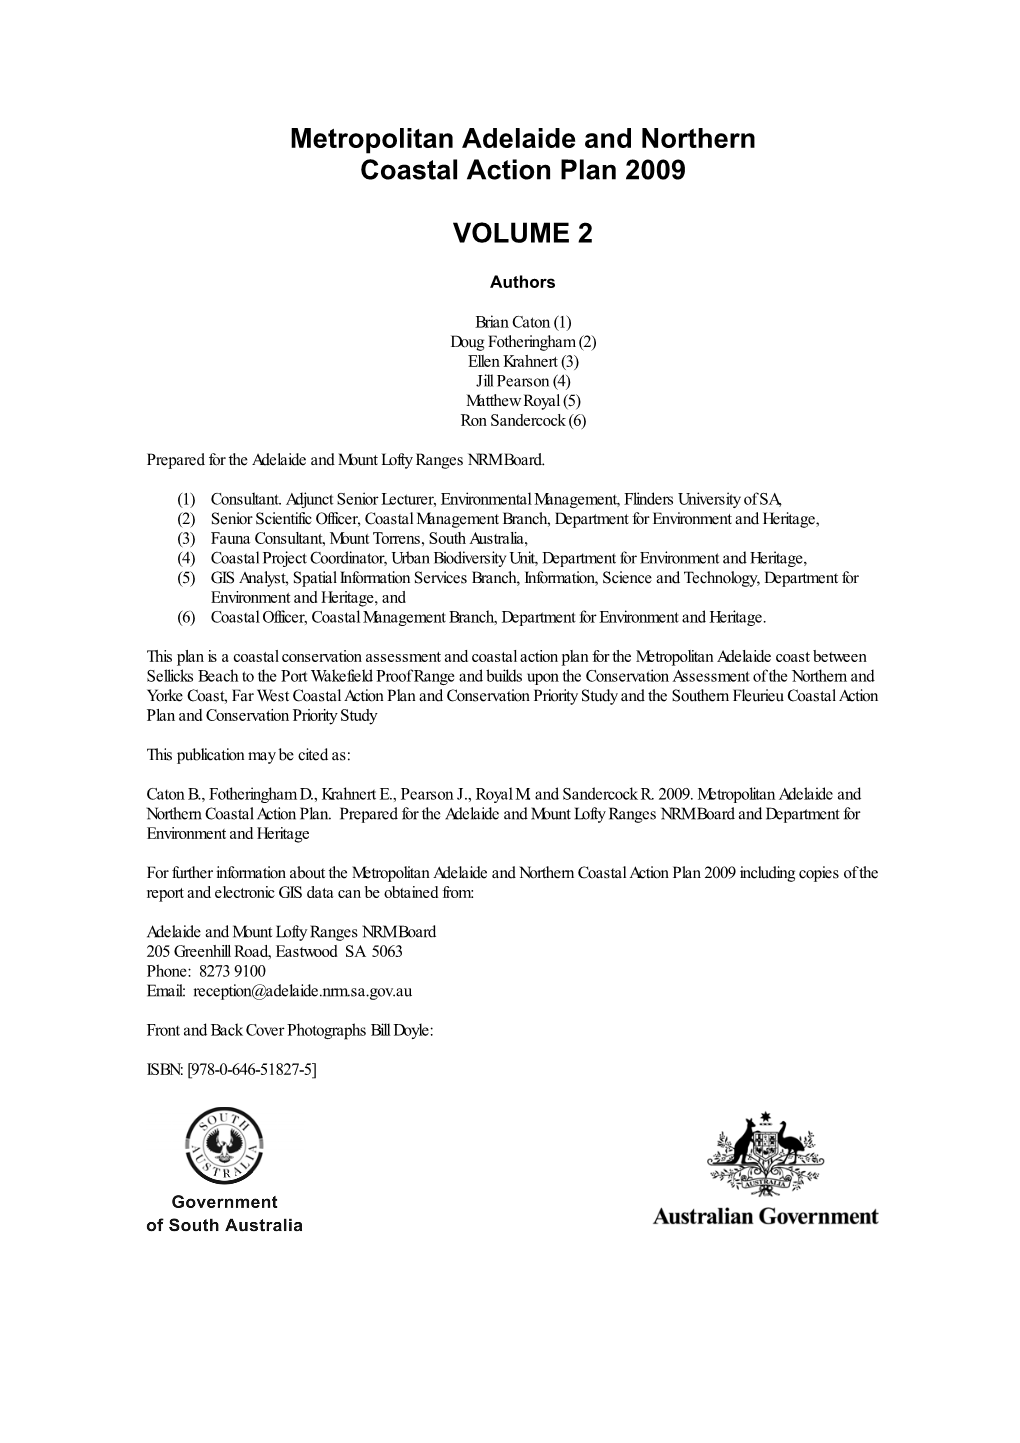 Metropolitan Adelaide and Northern Coastal Action Plan 2009 VOLUME 2